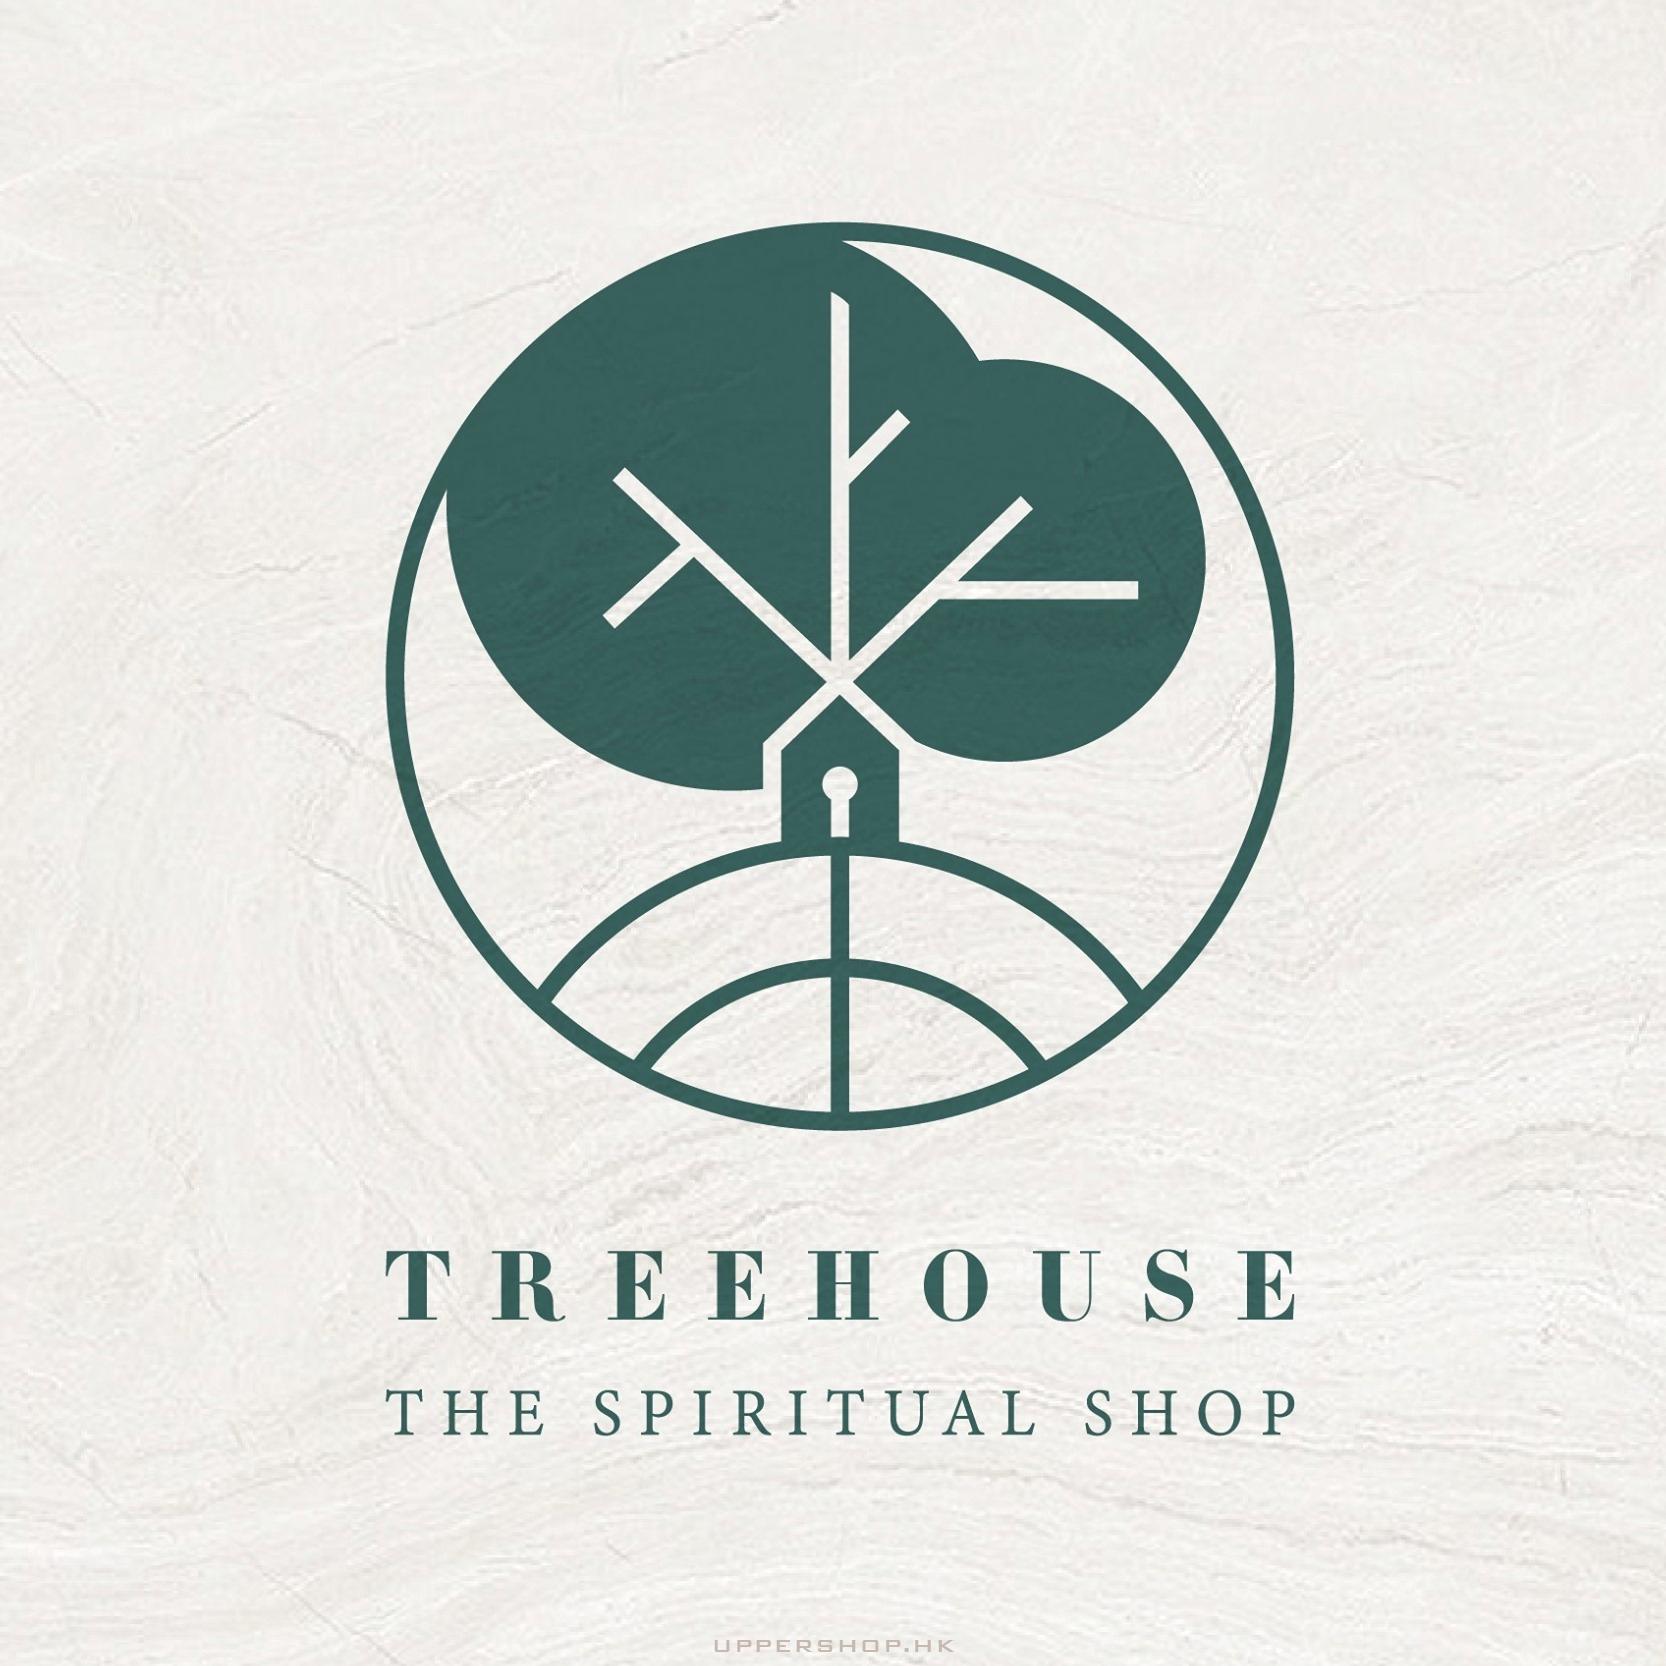 Treehouse the Spiritual Shop